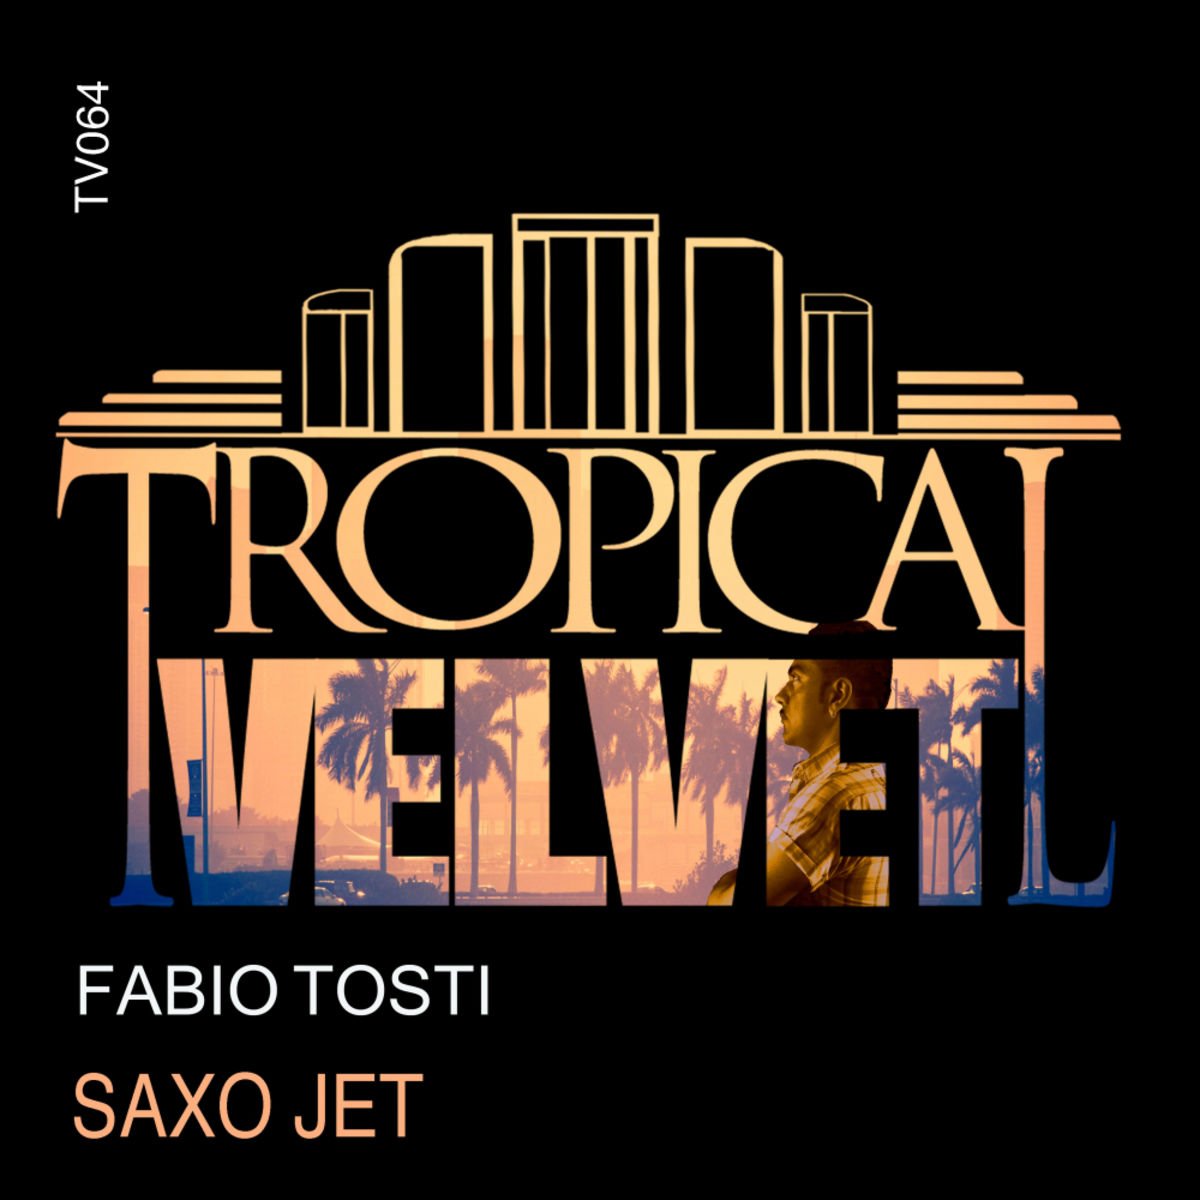 Fabio Tosti - Saxo Jet / Tropical Velvet